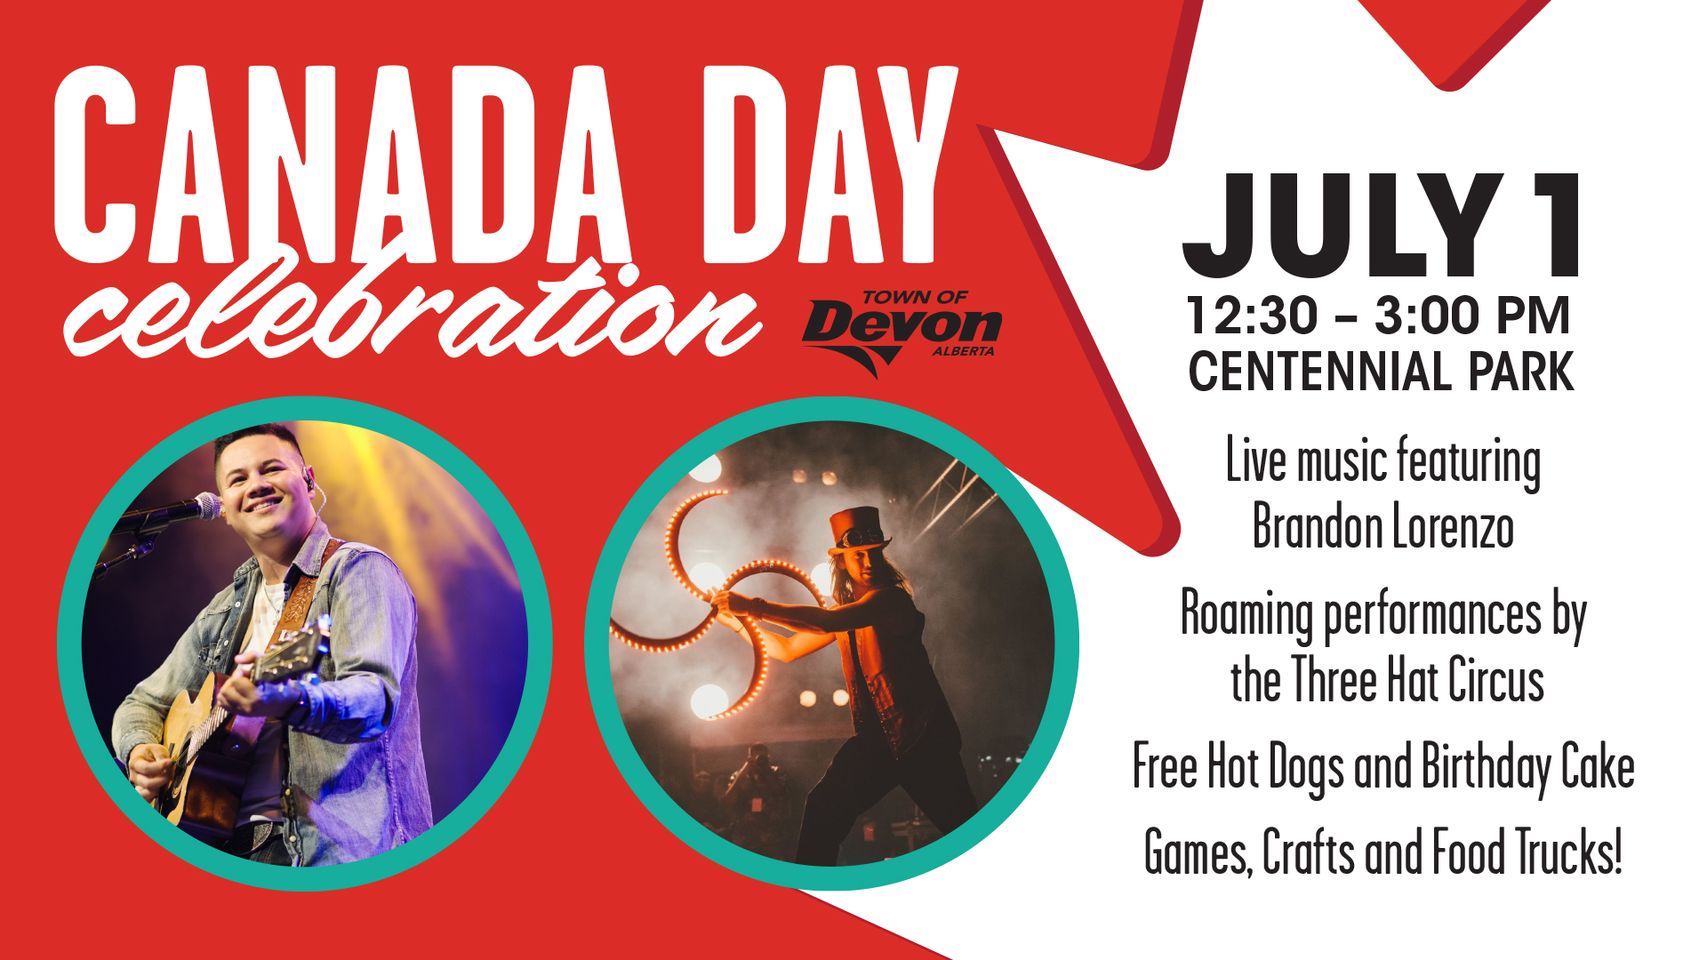 Canada Day Celebration Devon